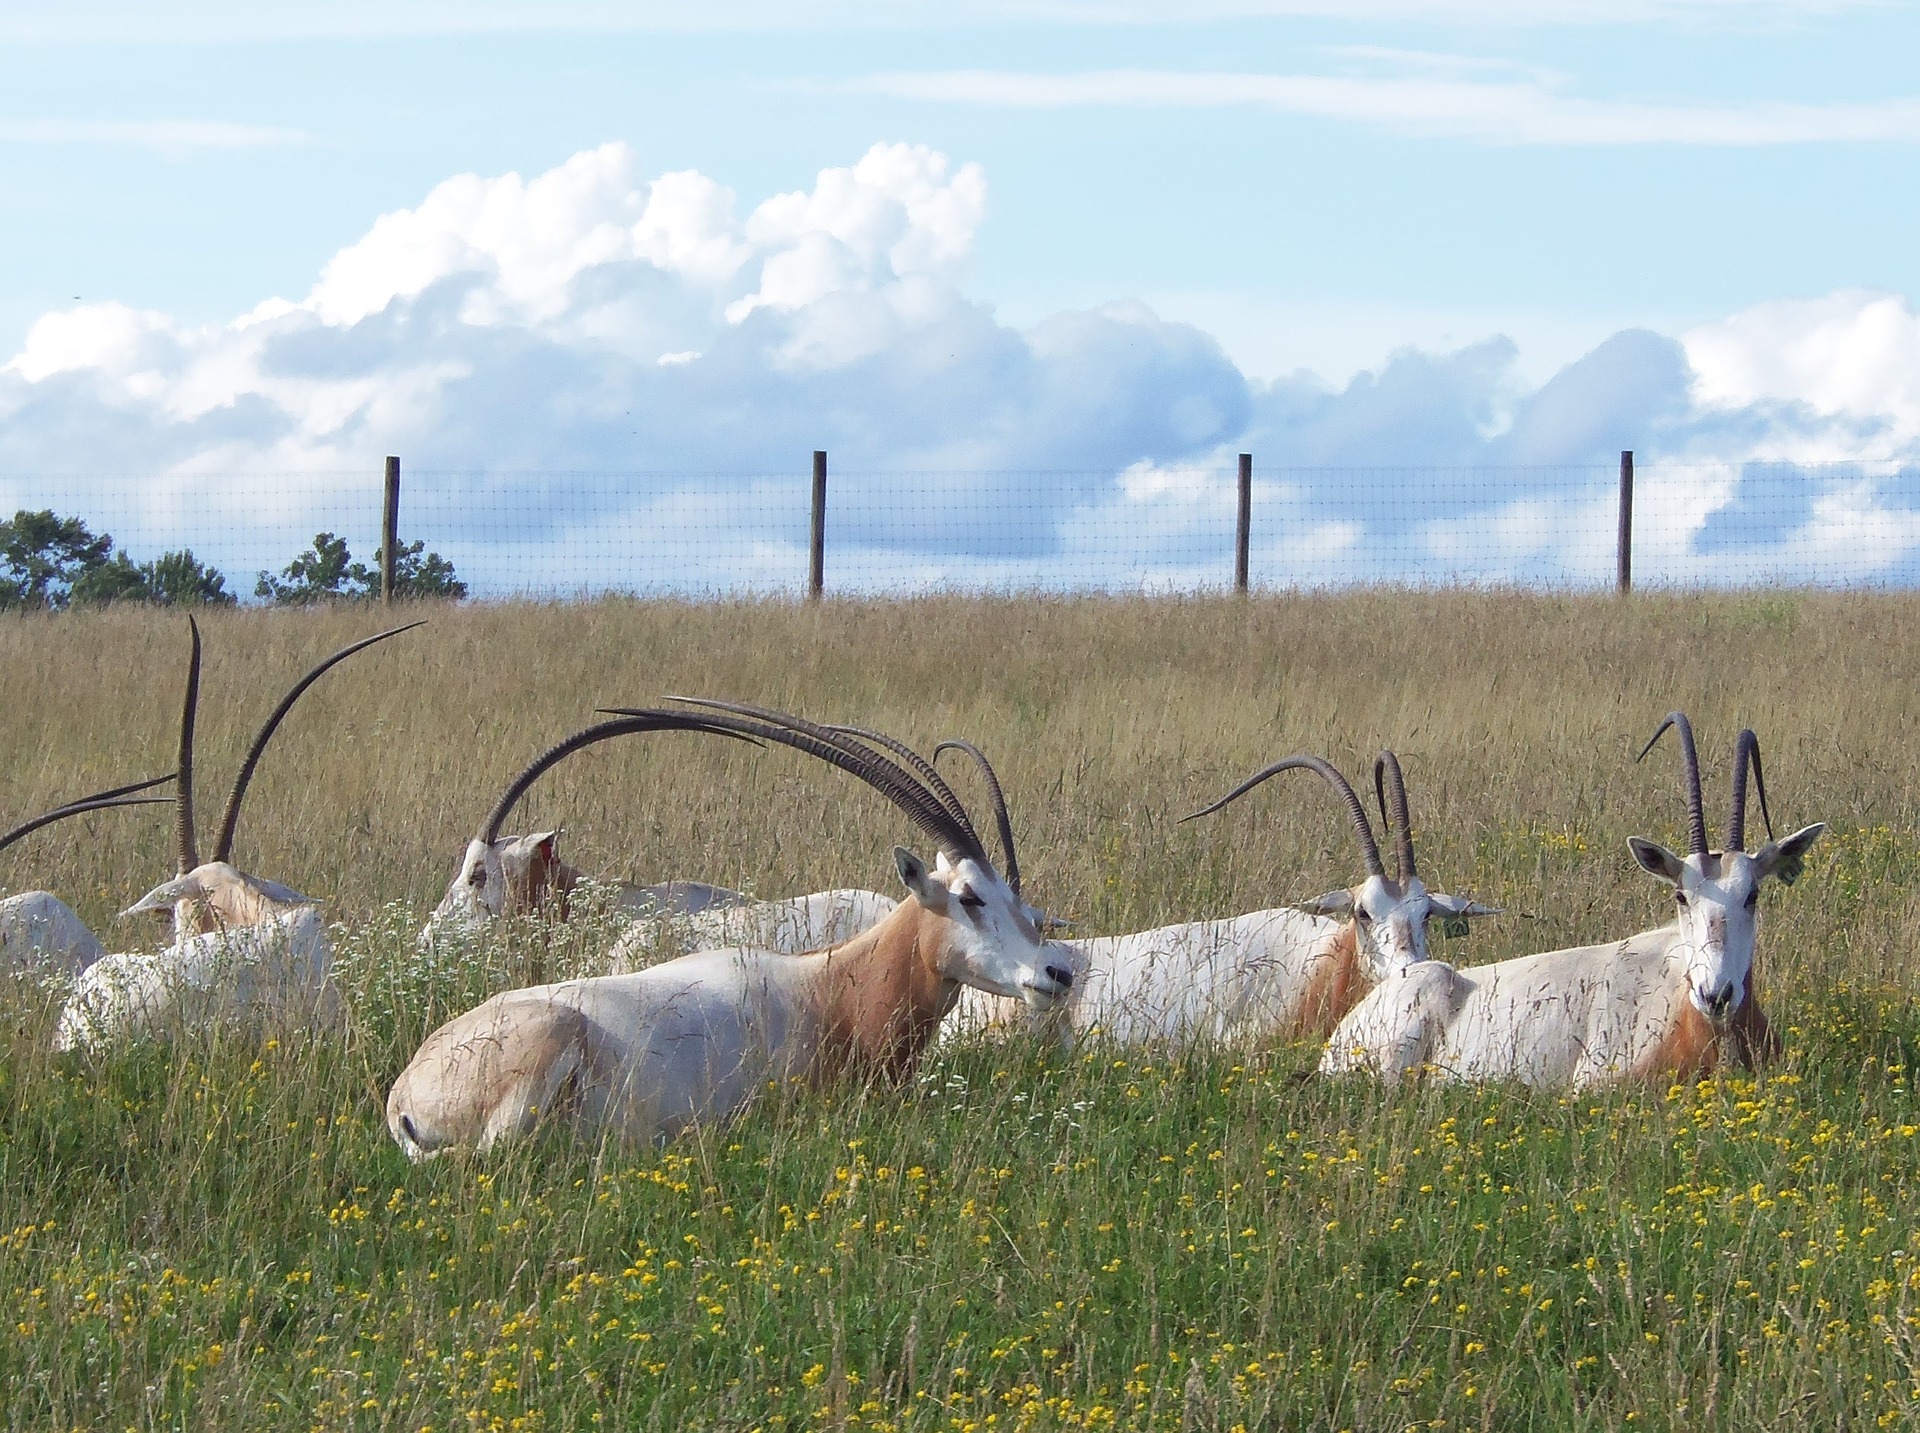 oryx algazelle, animal, mammifere herbivore d'afrique, extinction